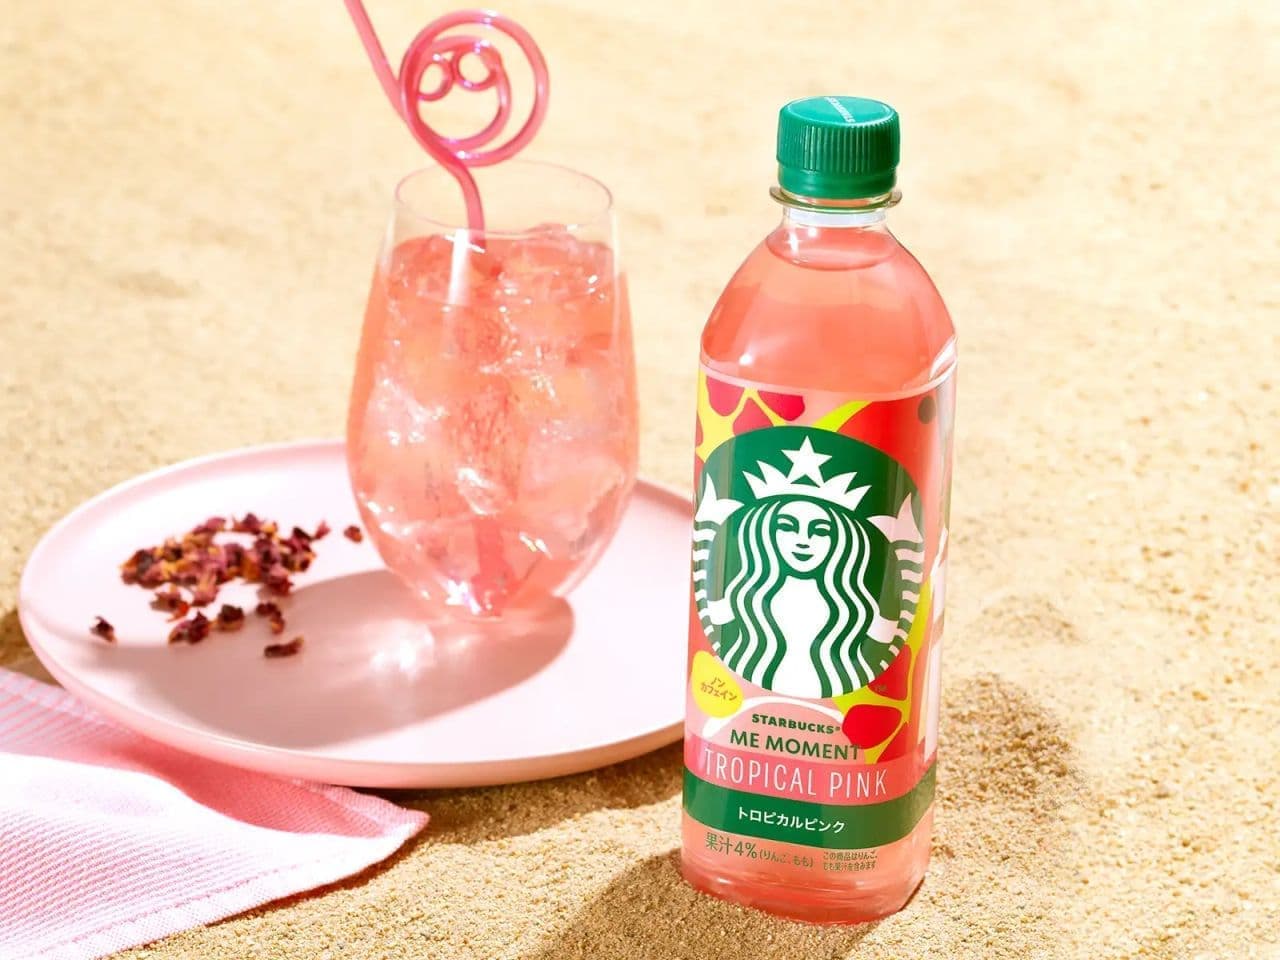 Starbucks ME MOMENT Tropical Pink